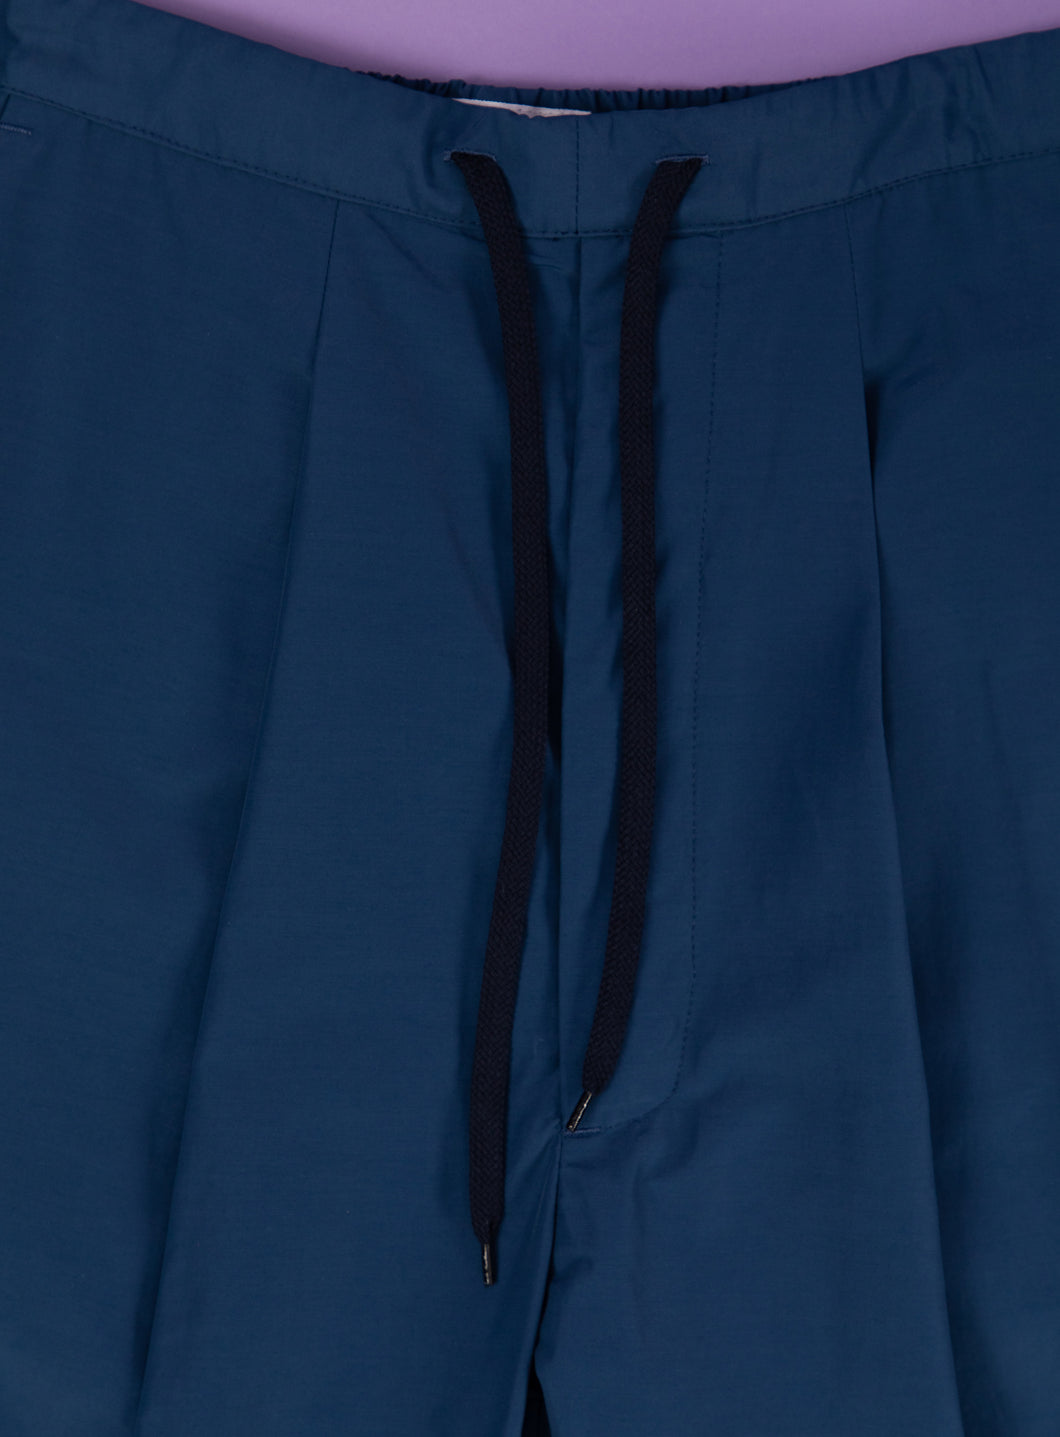 Lace Waist Pants with Deep Pleats in Petrol Blue Microfiber